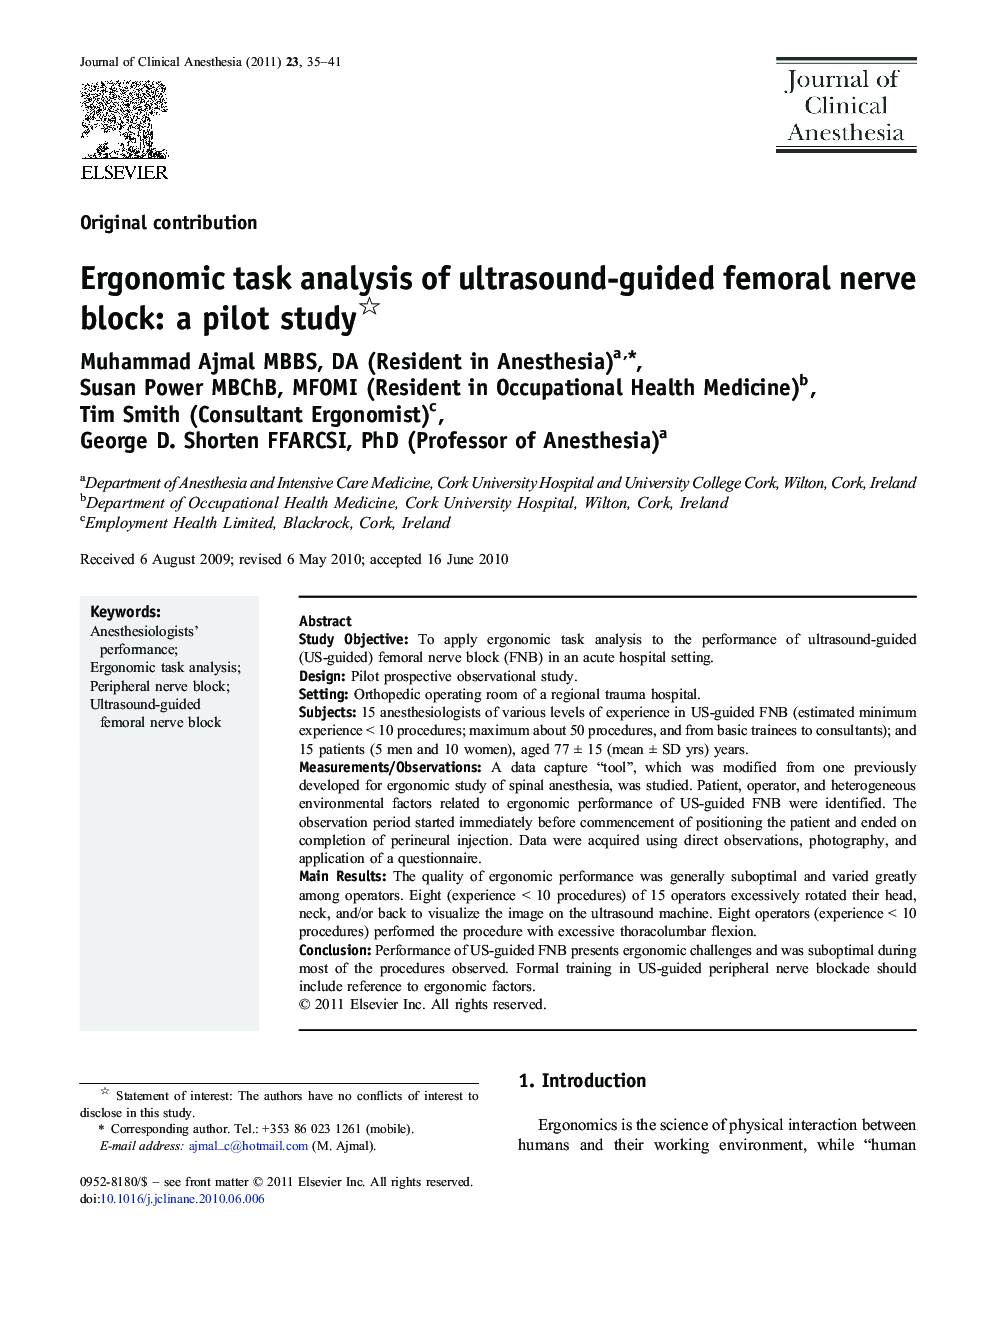 Ergonomic task analysis of ultrasound-guided femoral nerve block: a pilot study 